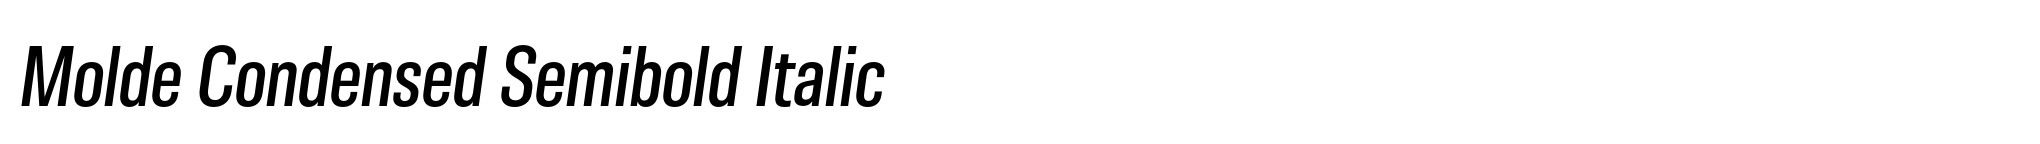 Molde Condensed Semibold Italic image